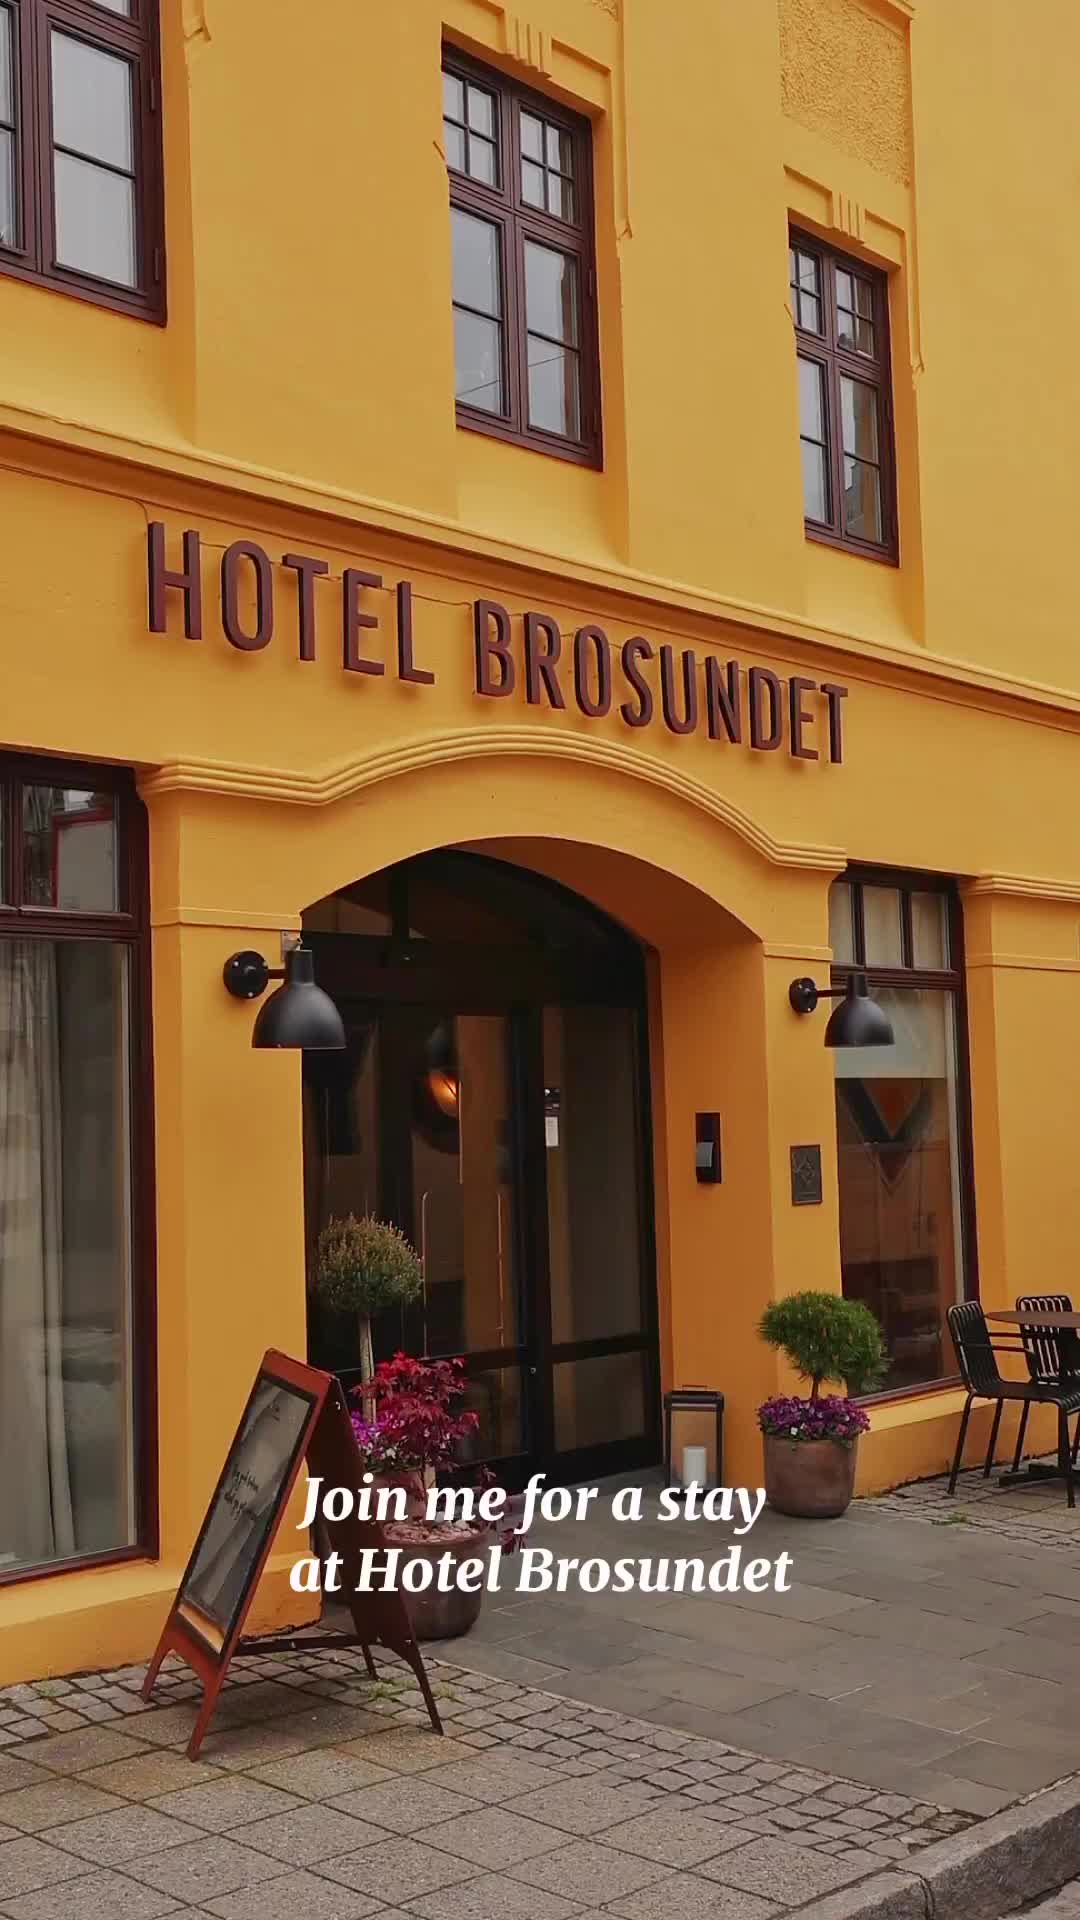 Discover the Charm of Hotel Brosundet in Ålesund